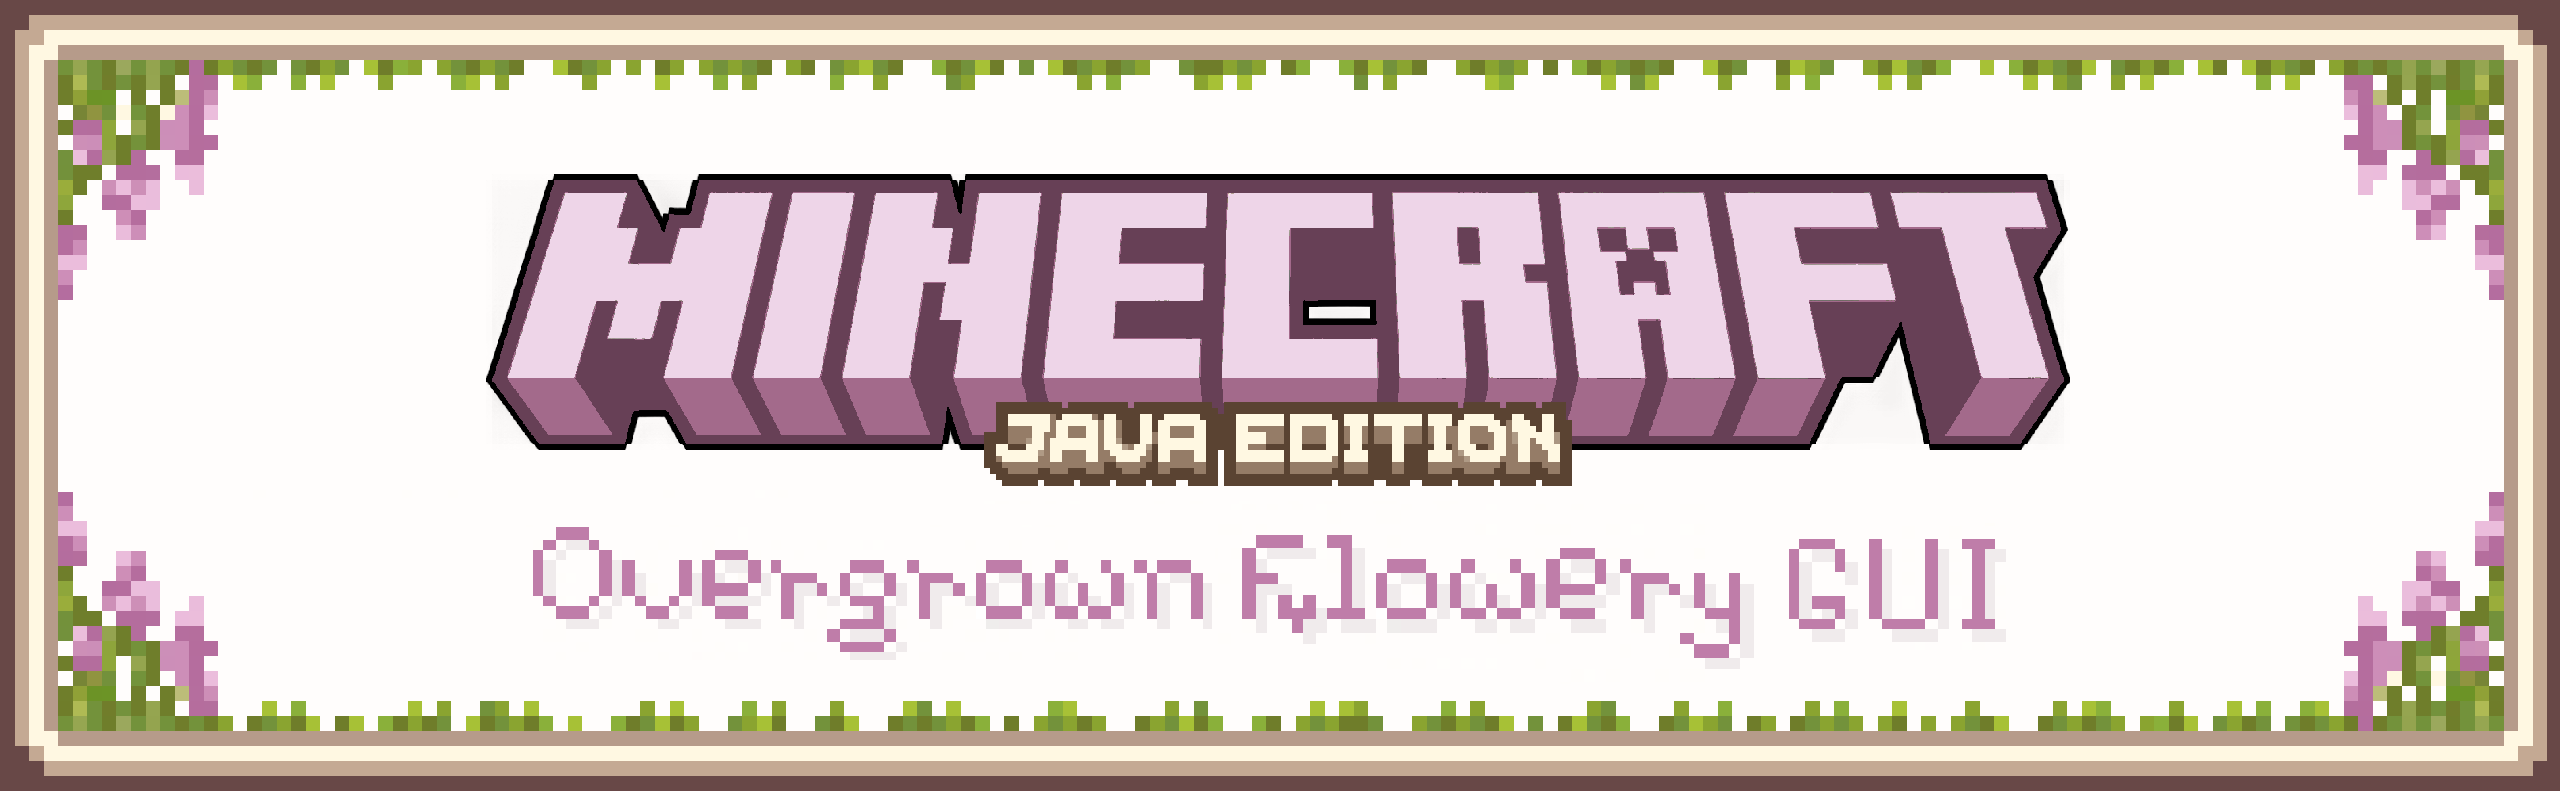 Overgrown Flowery GUI screenshot 1